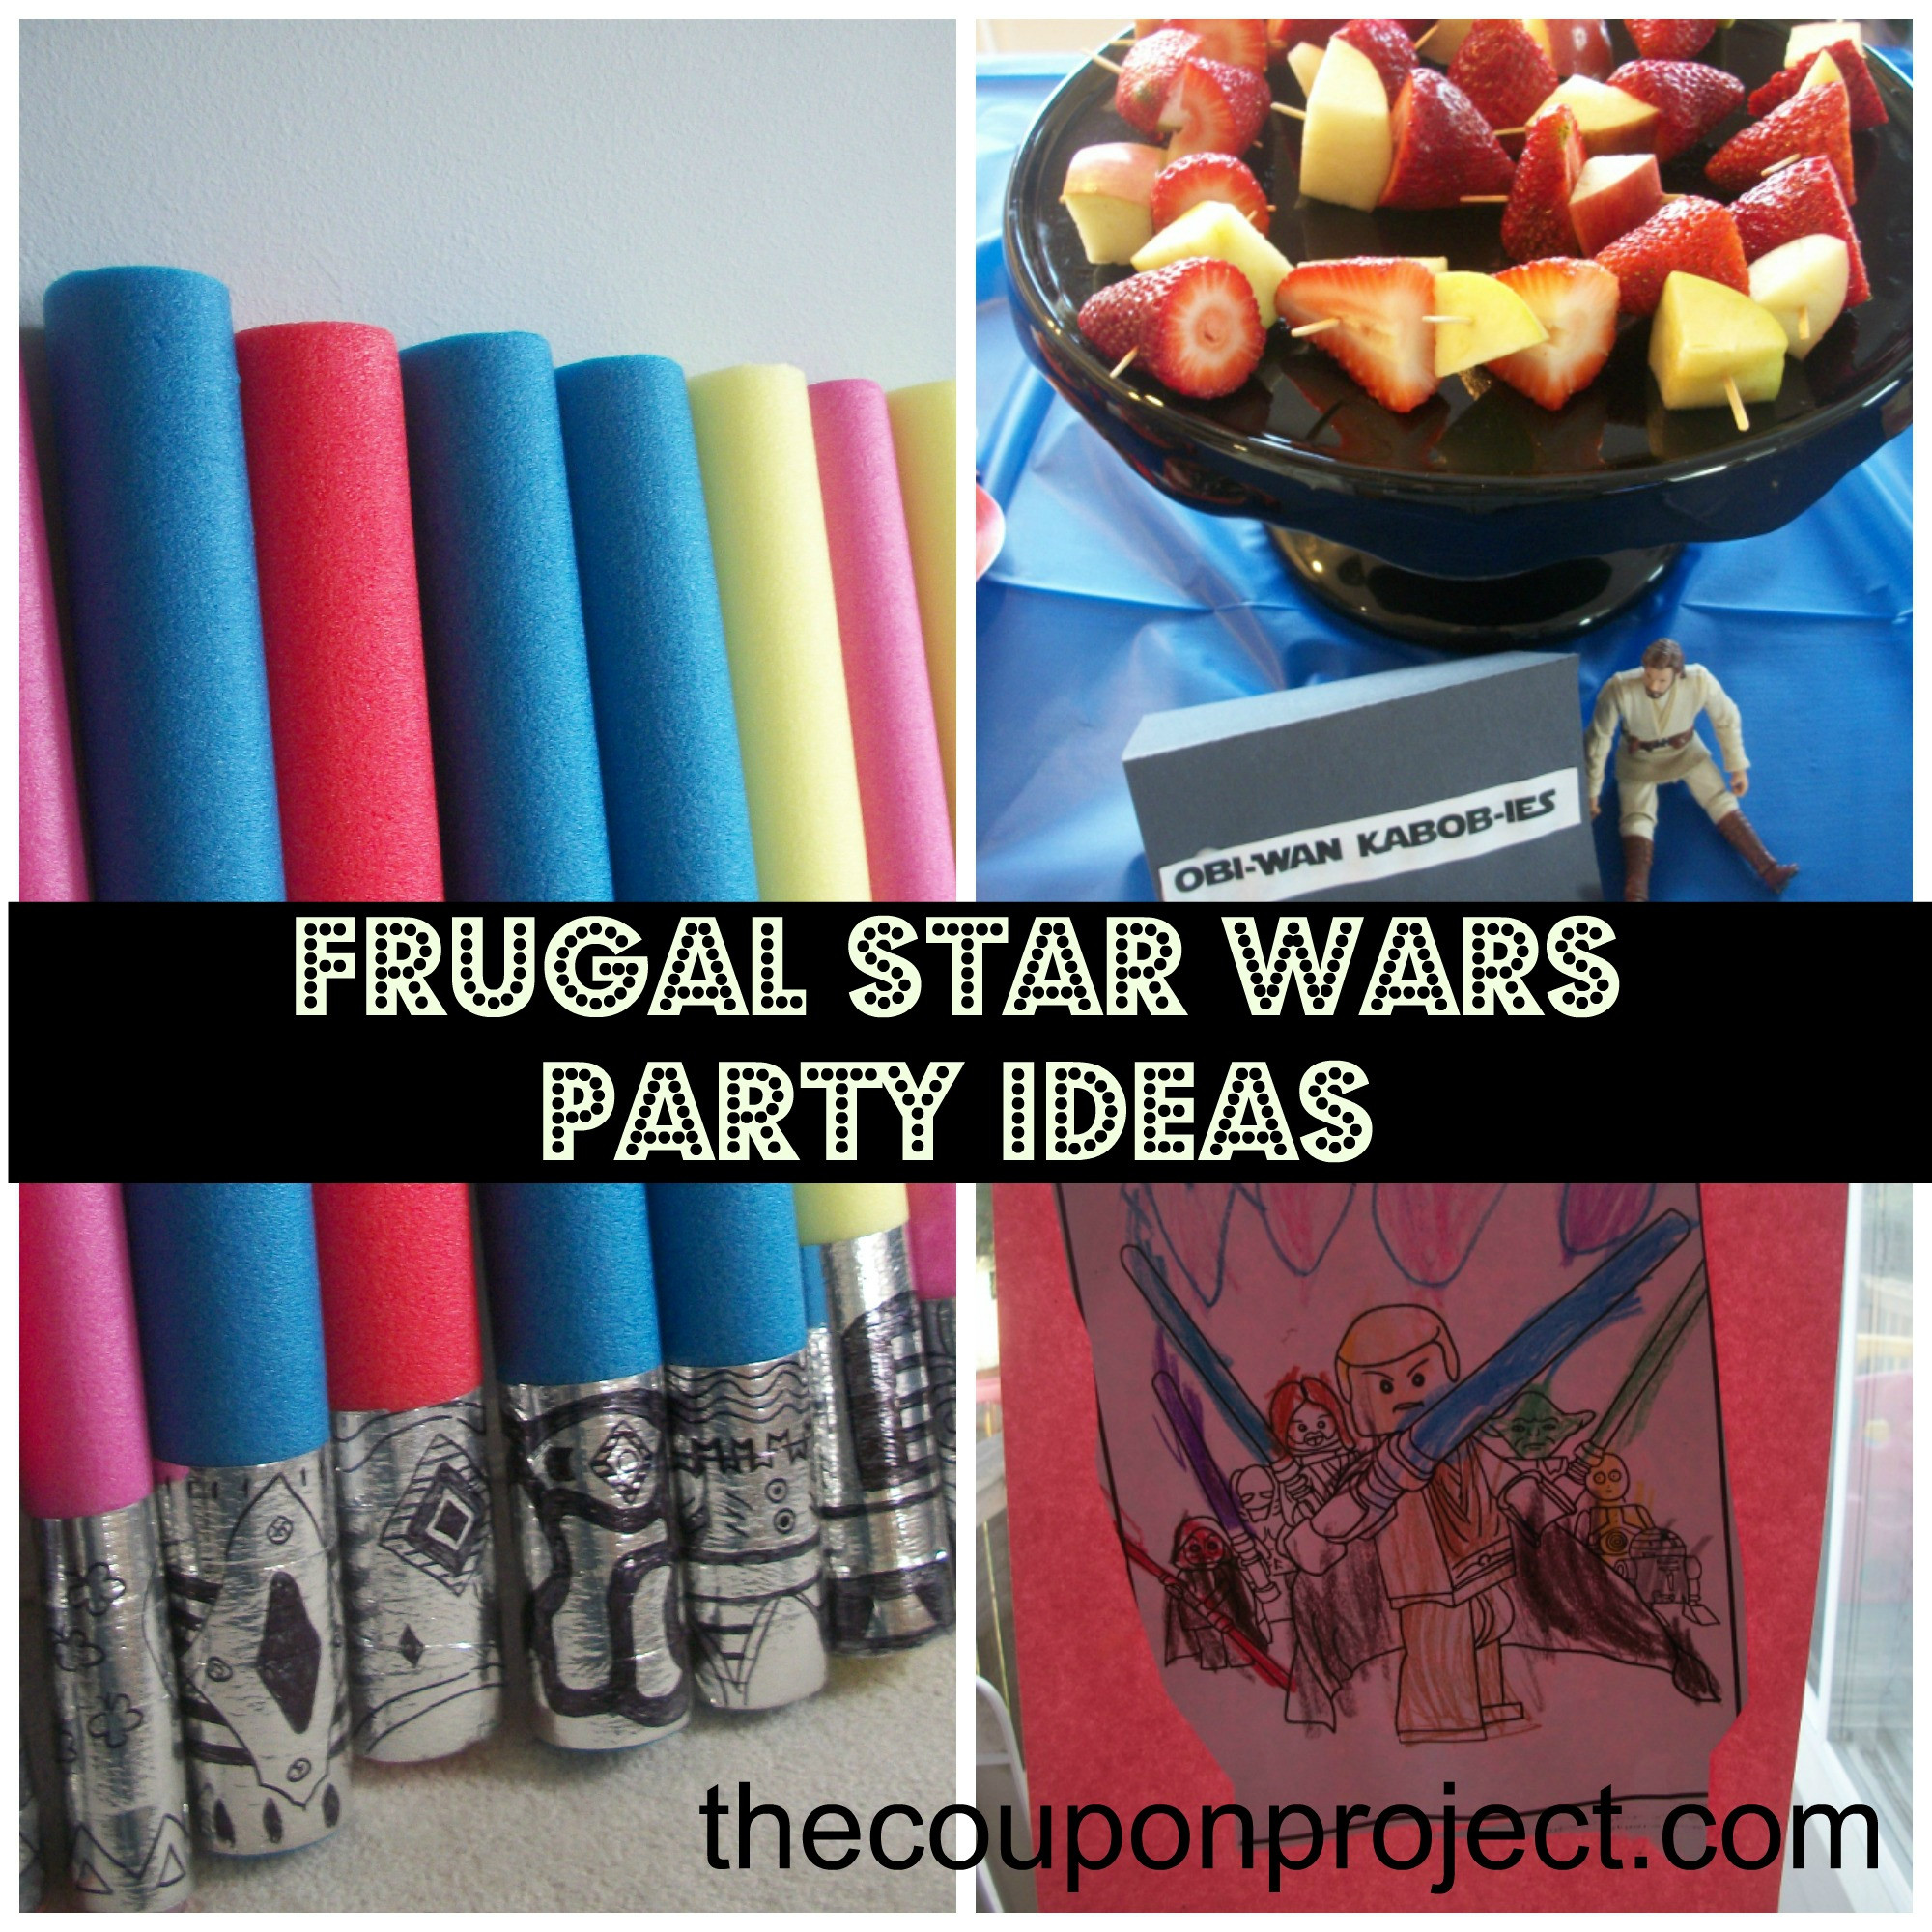 Star Wars Birthday Party Ideas
 Frugal Star Wars Party Ideas